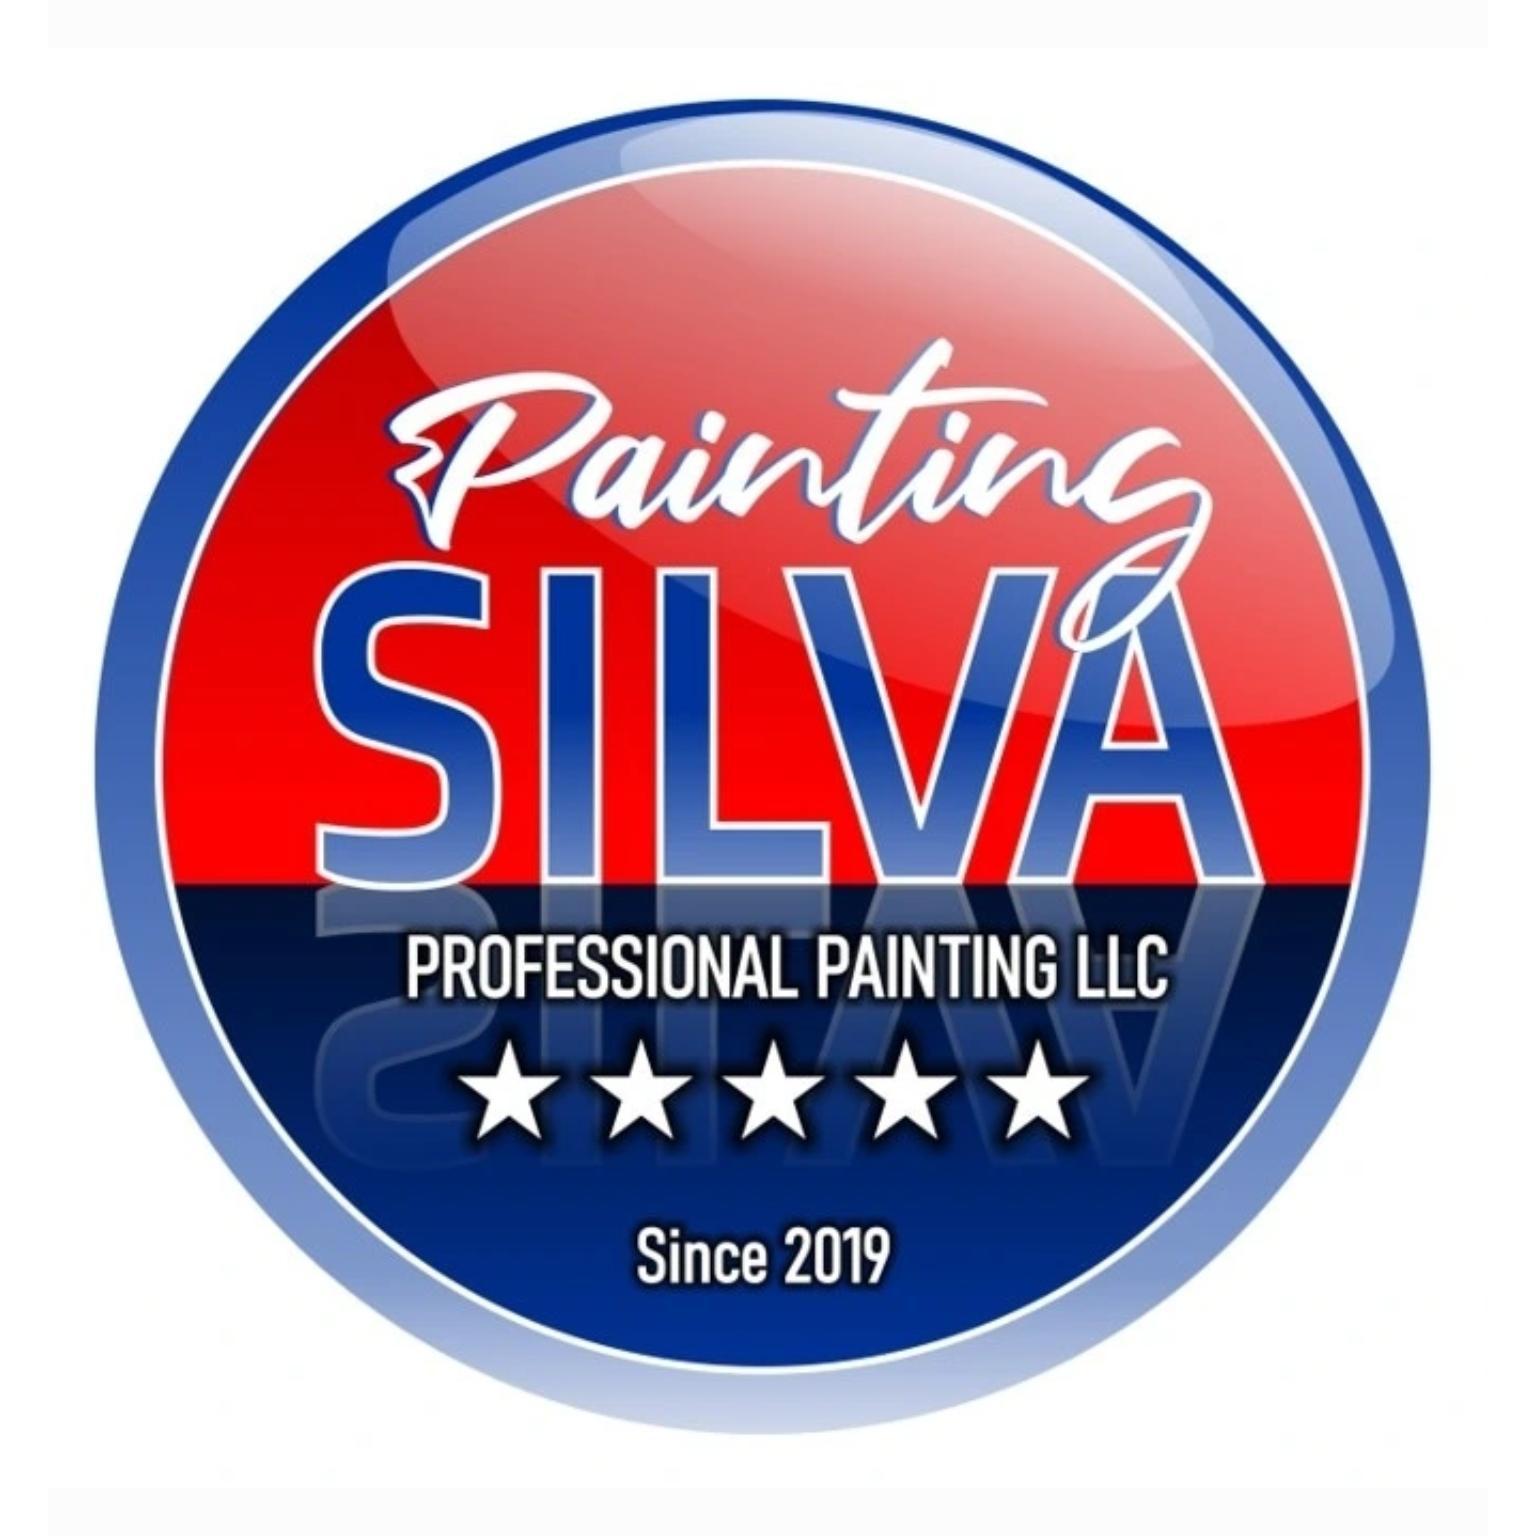 Painting Silva LLC